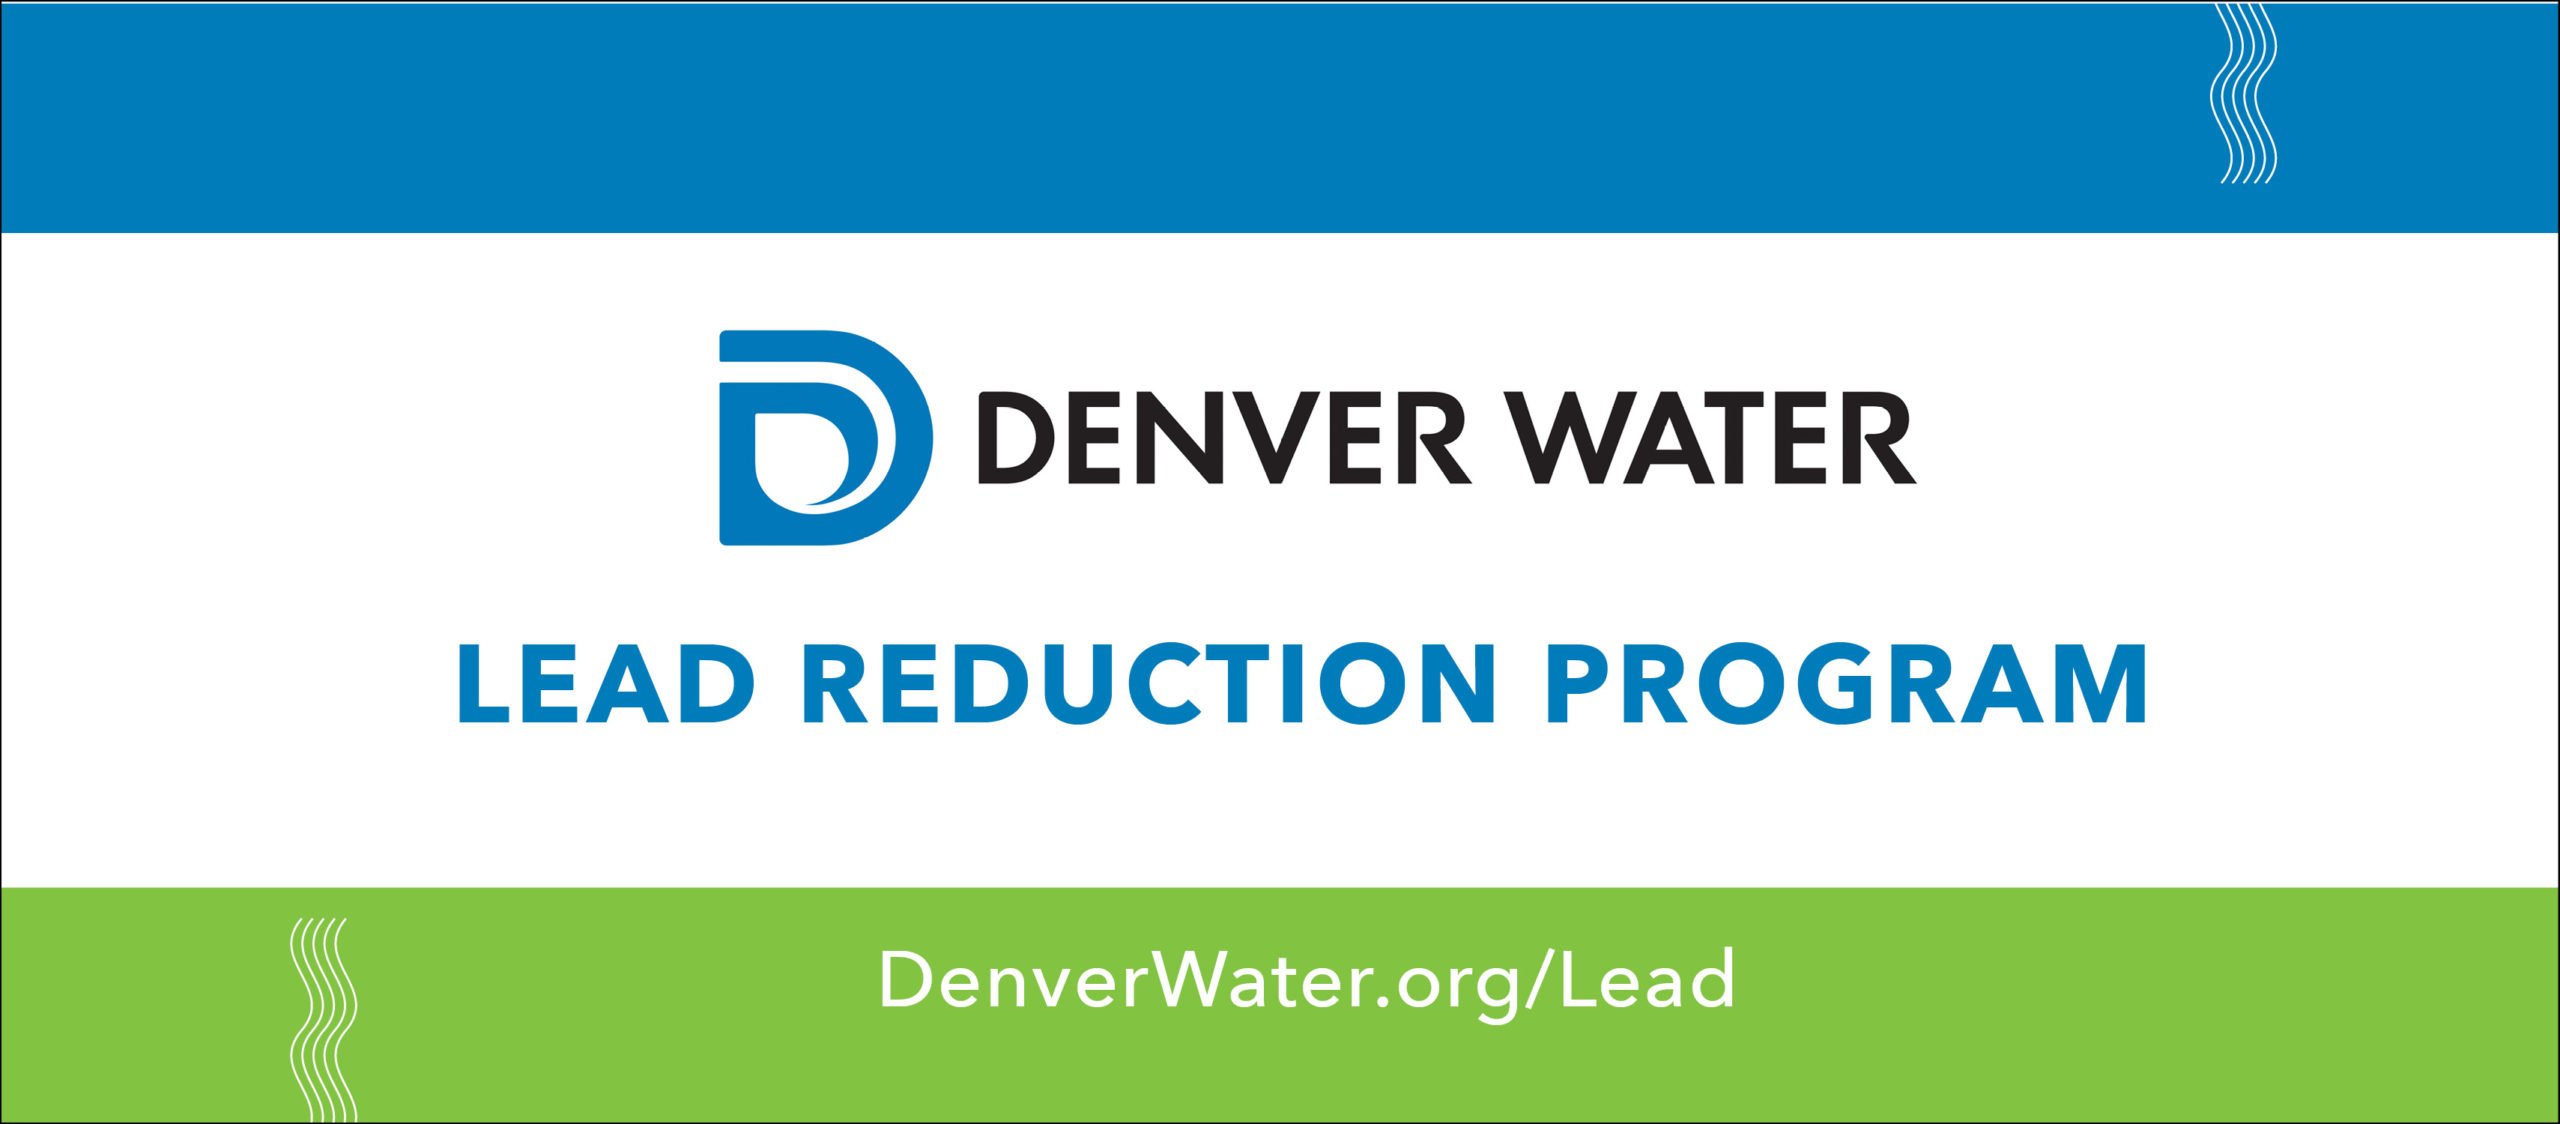 Lead Reduction Program banner.